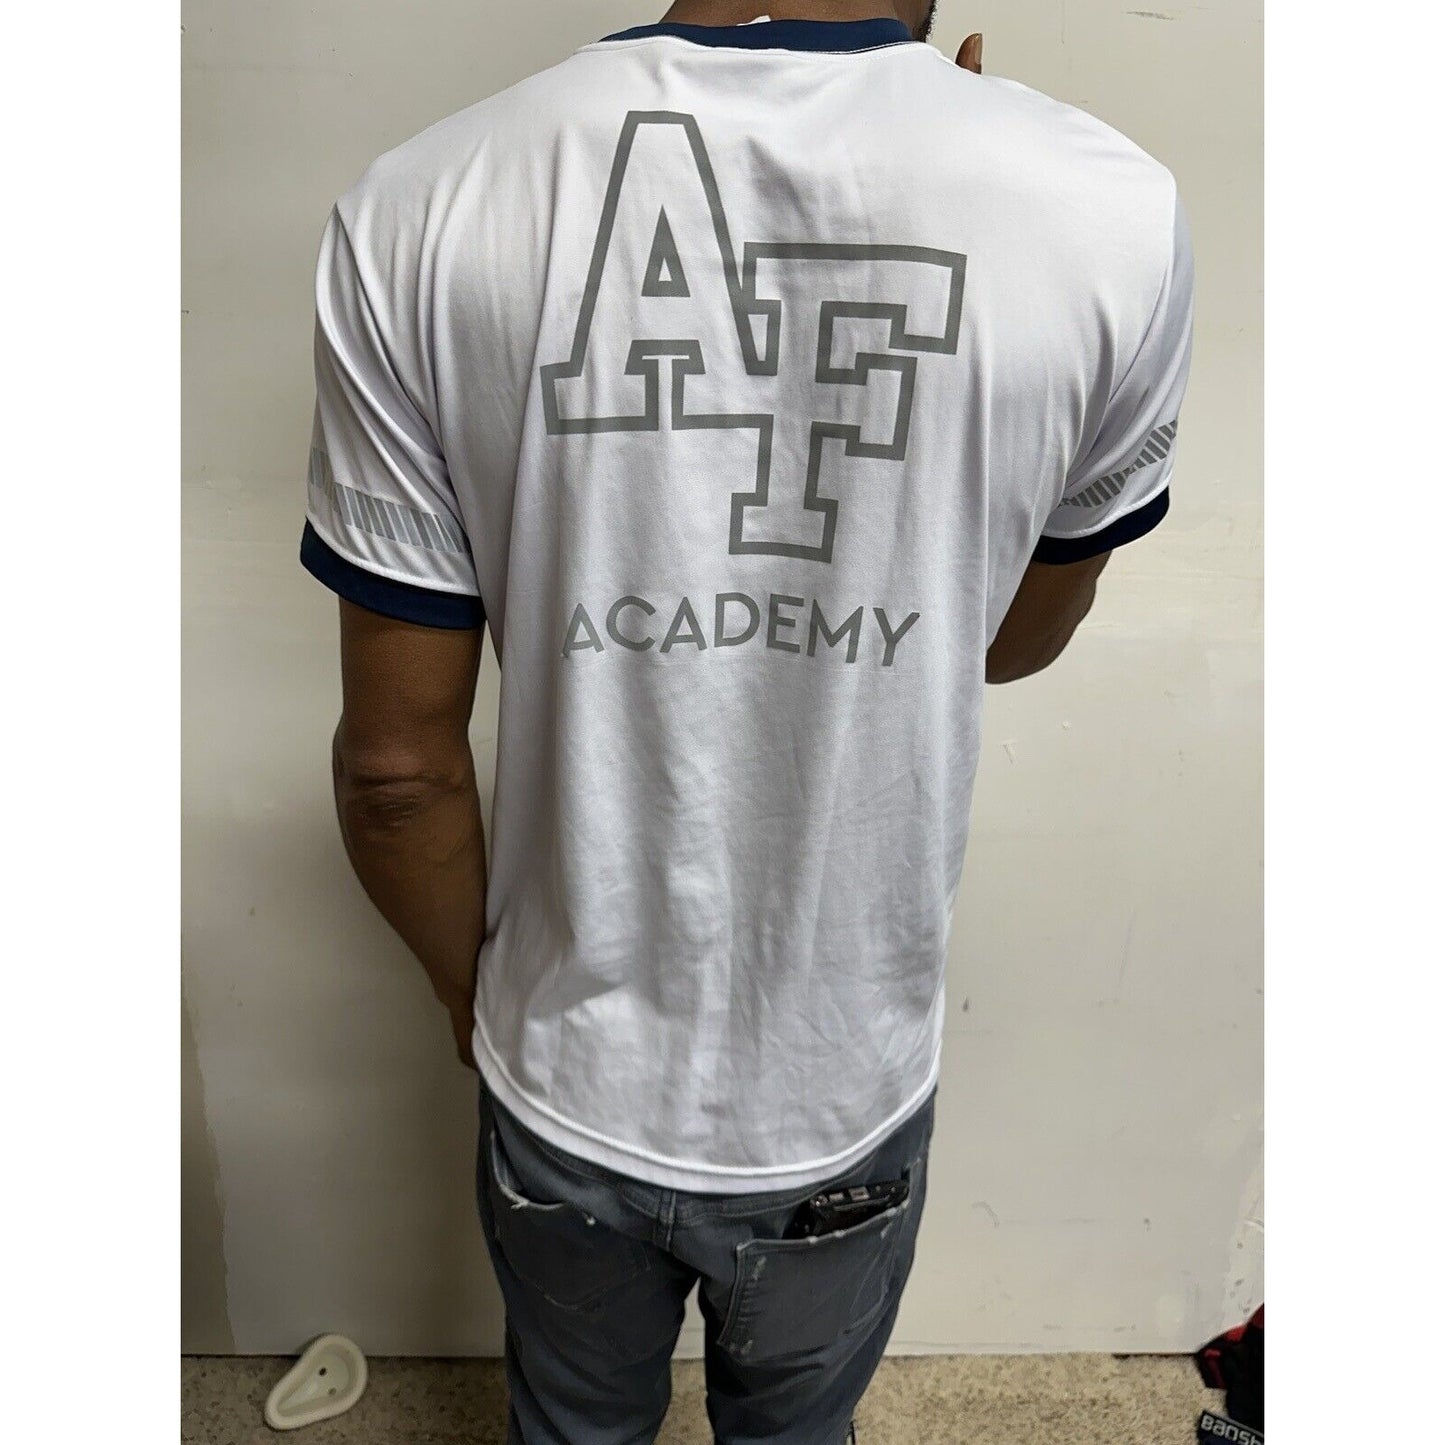 Men’s USAFA Pt Cadet Uniform Shirt Size Small Physical Fitness